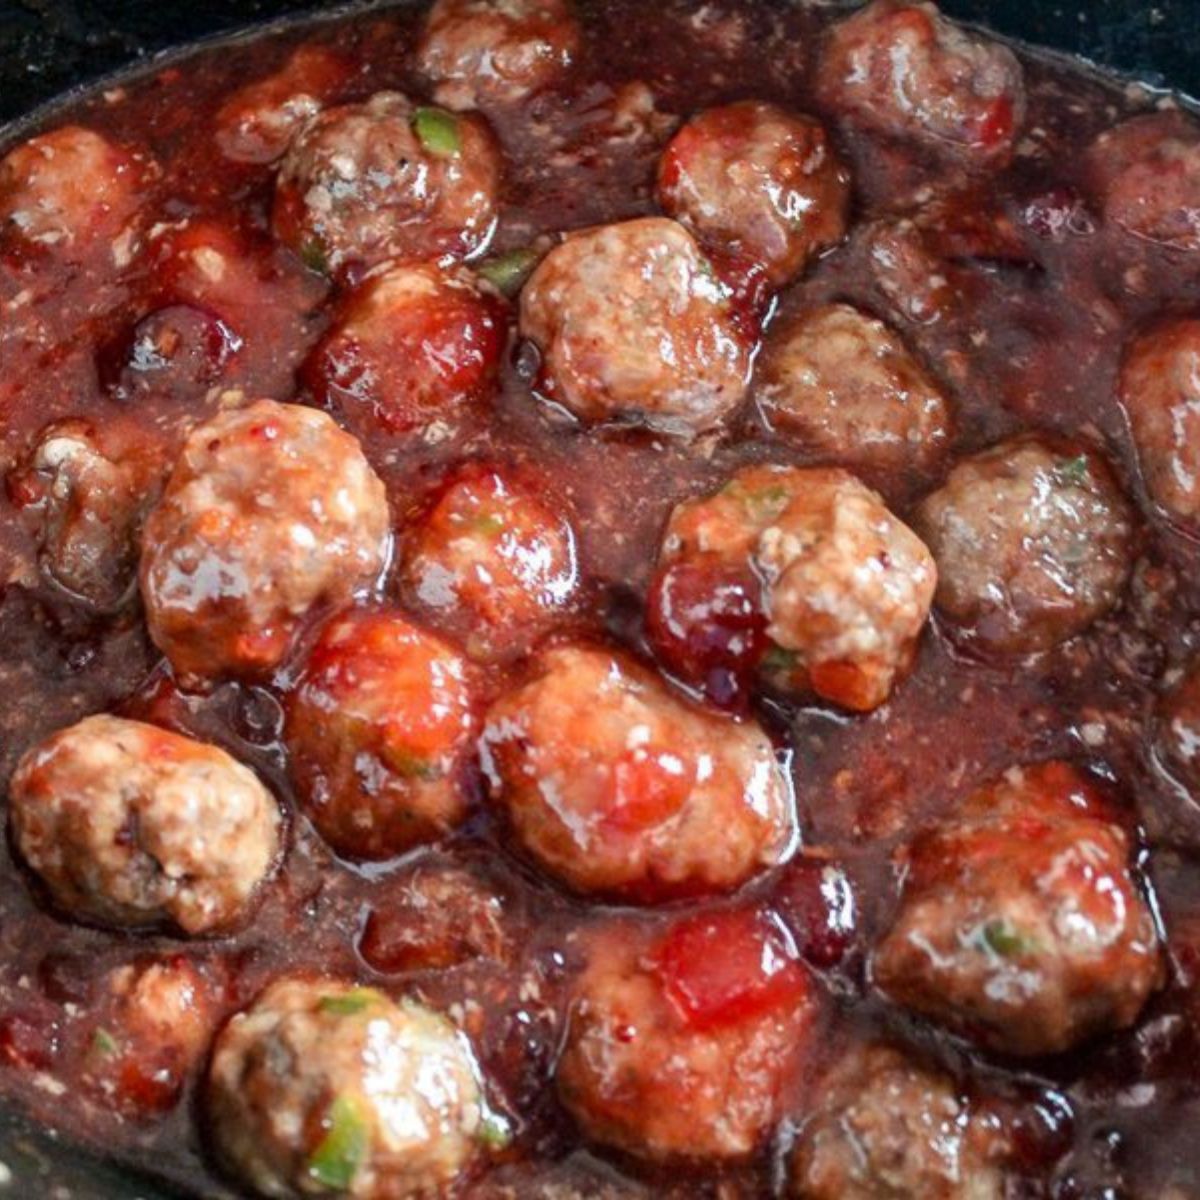 Crockpot Meatballs